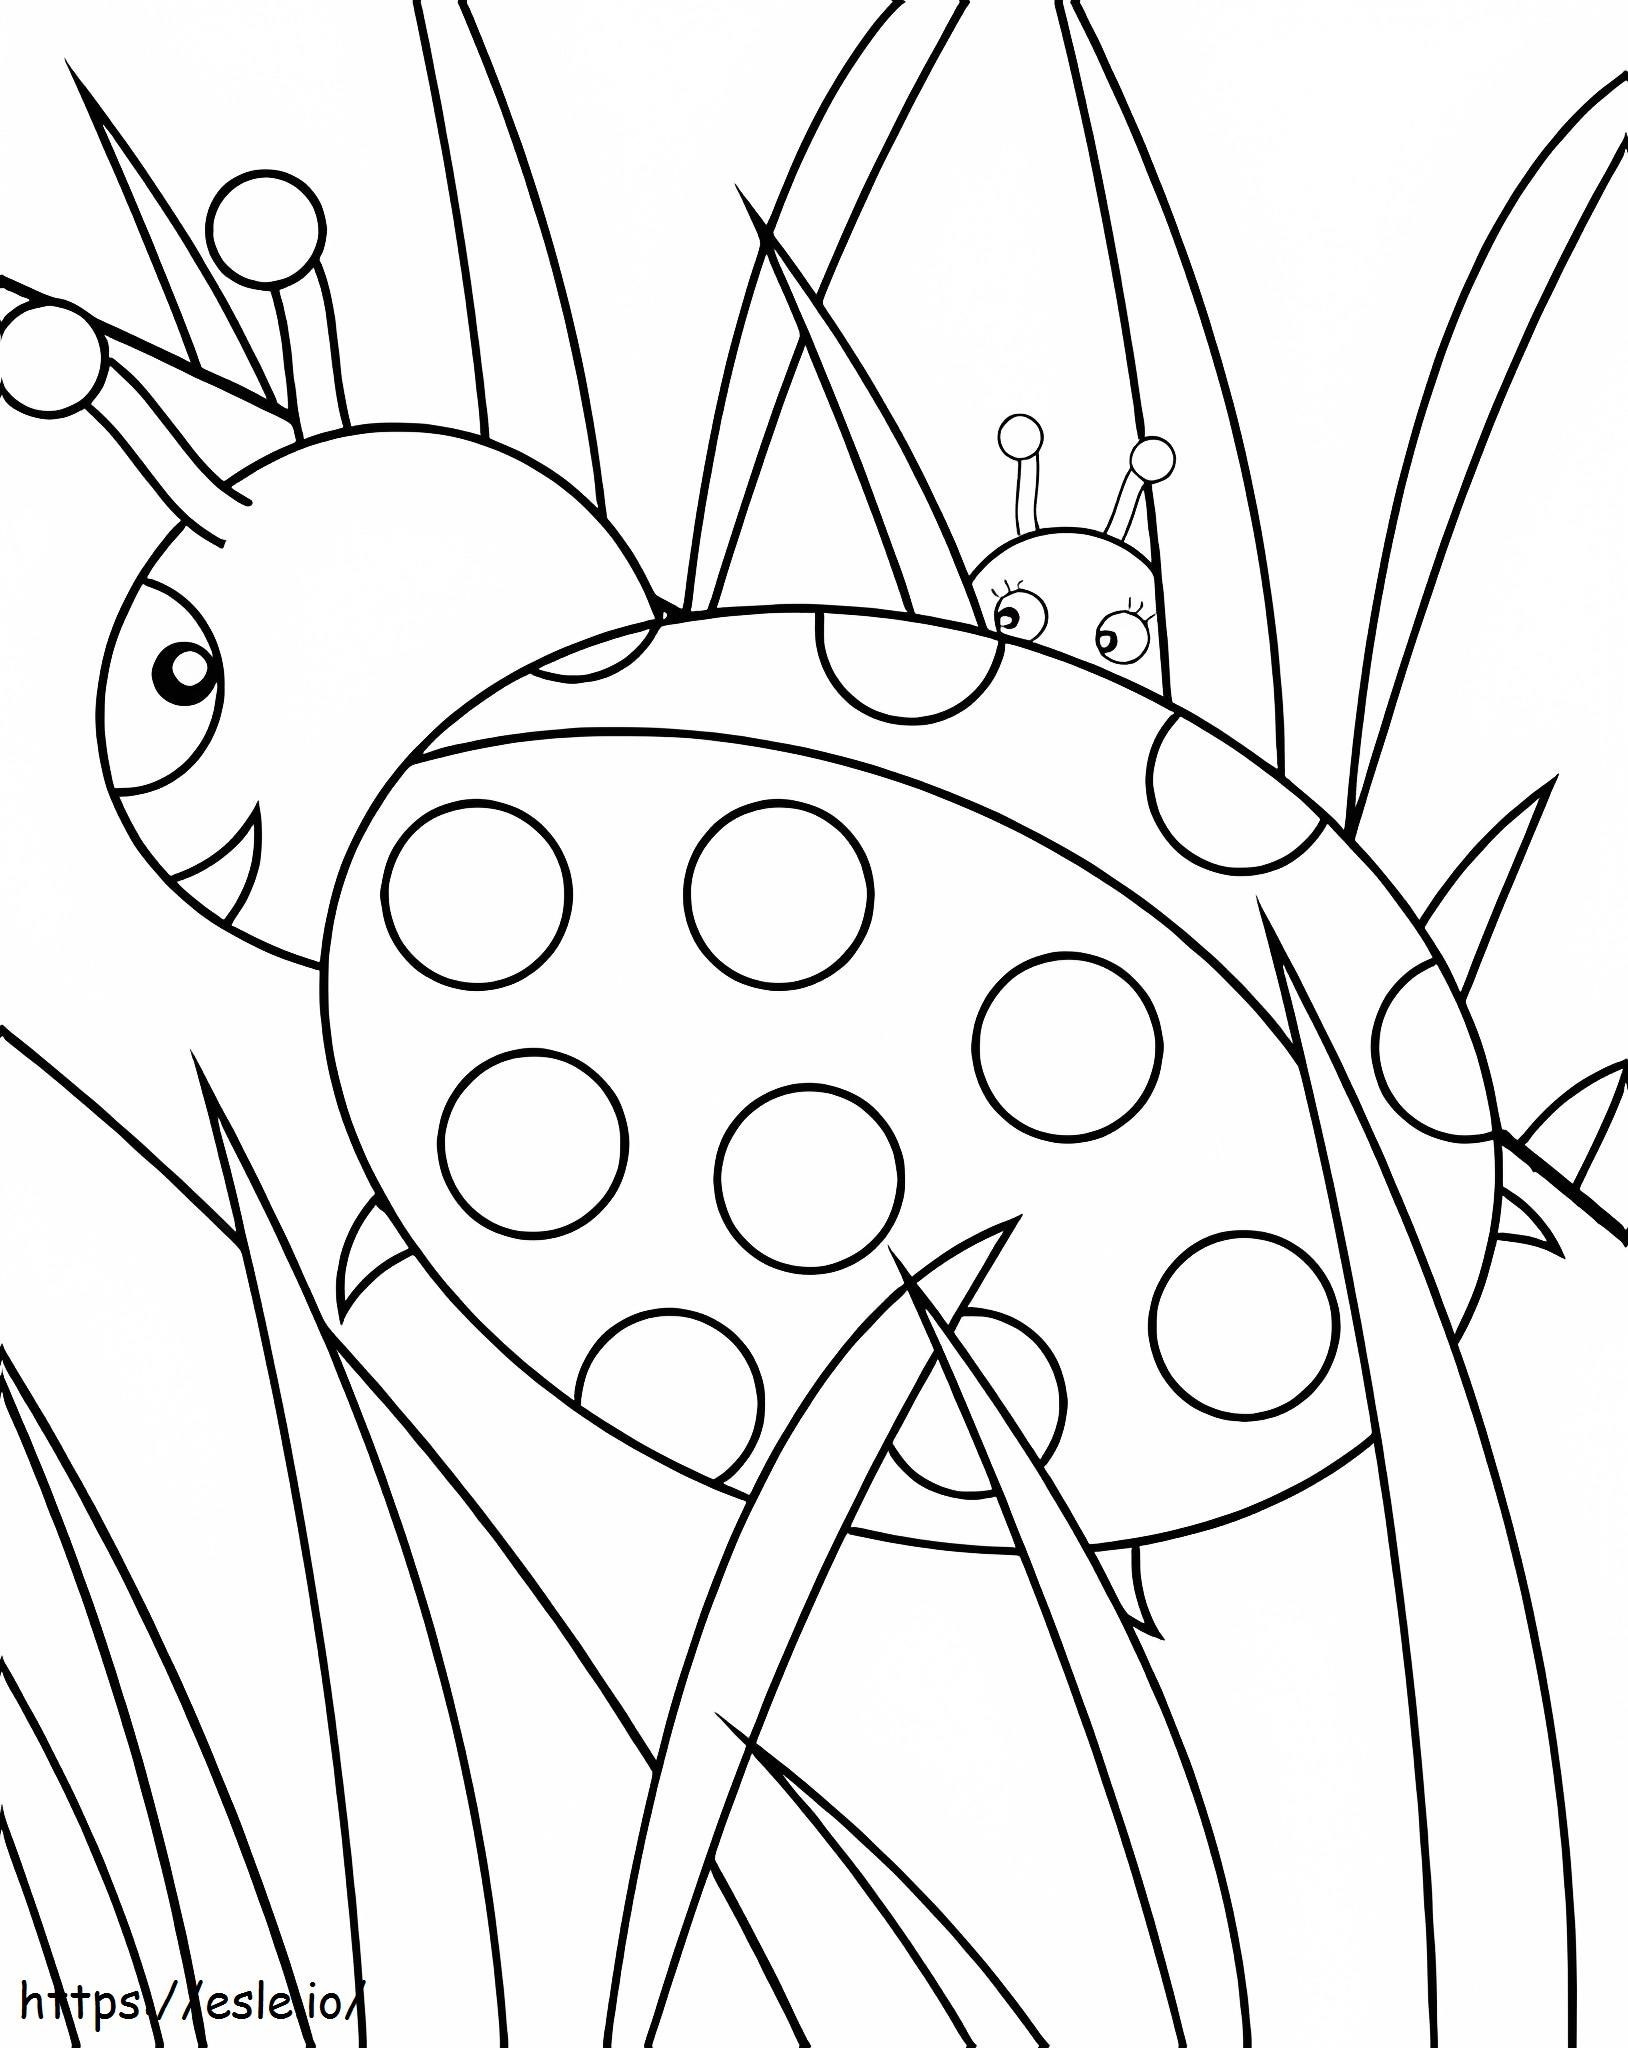 Big Ladybug coloring page